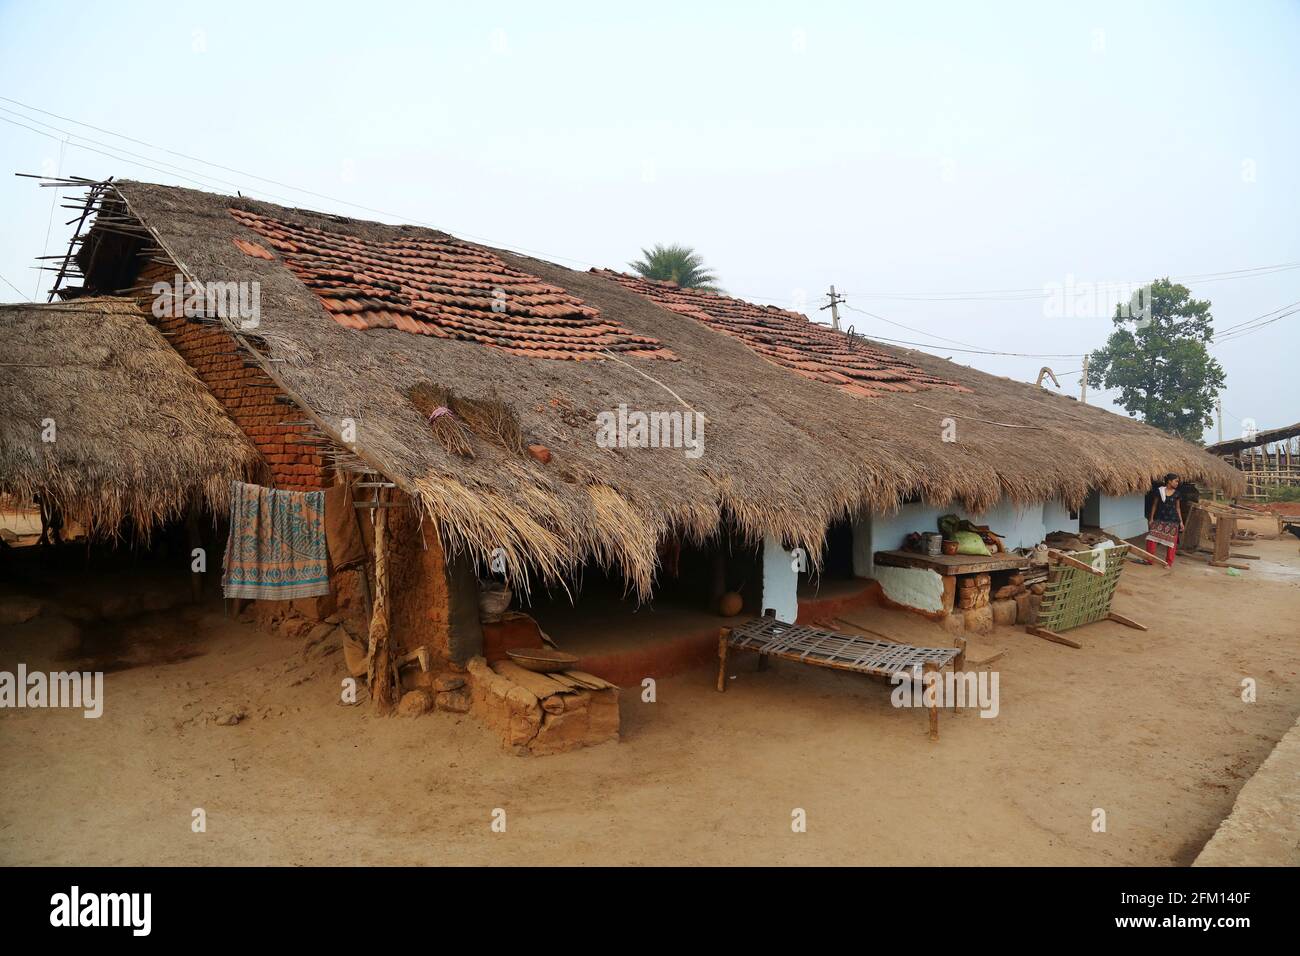 Traditional House of KONDA SAVARA TRIBE at Isukaguda Village - Srikakulam District, Andhra Pradesh, India Stock Photo